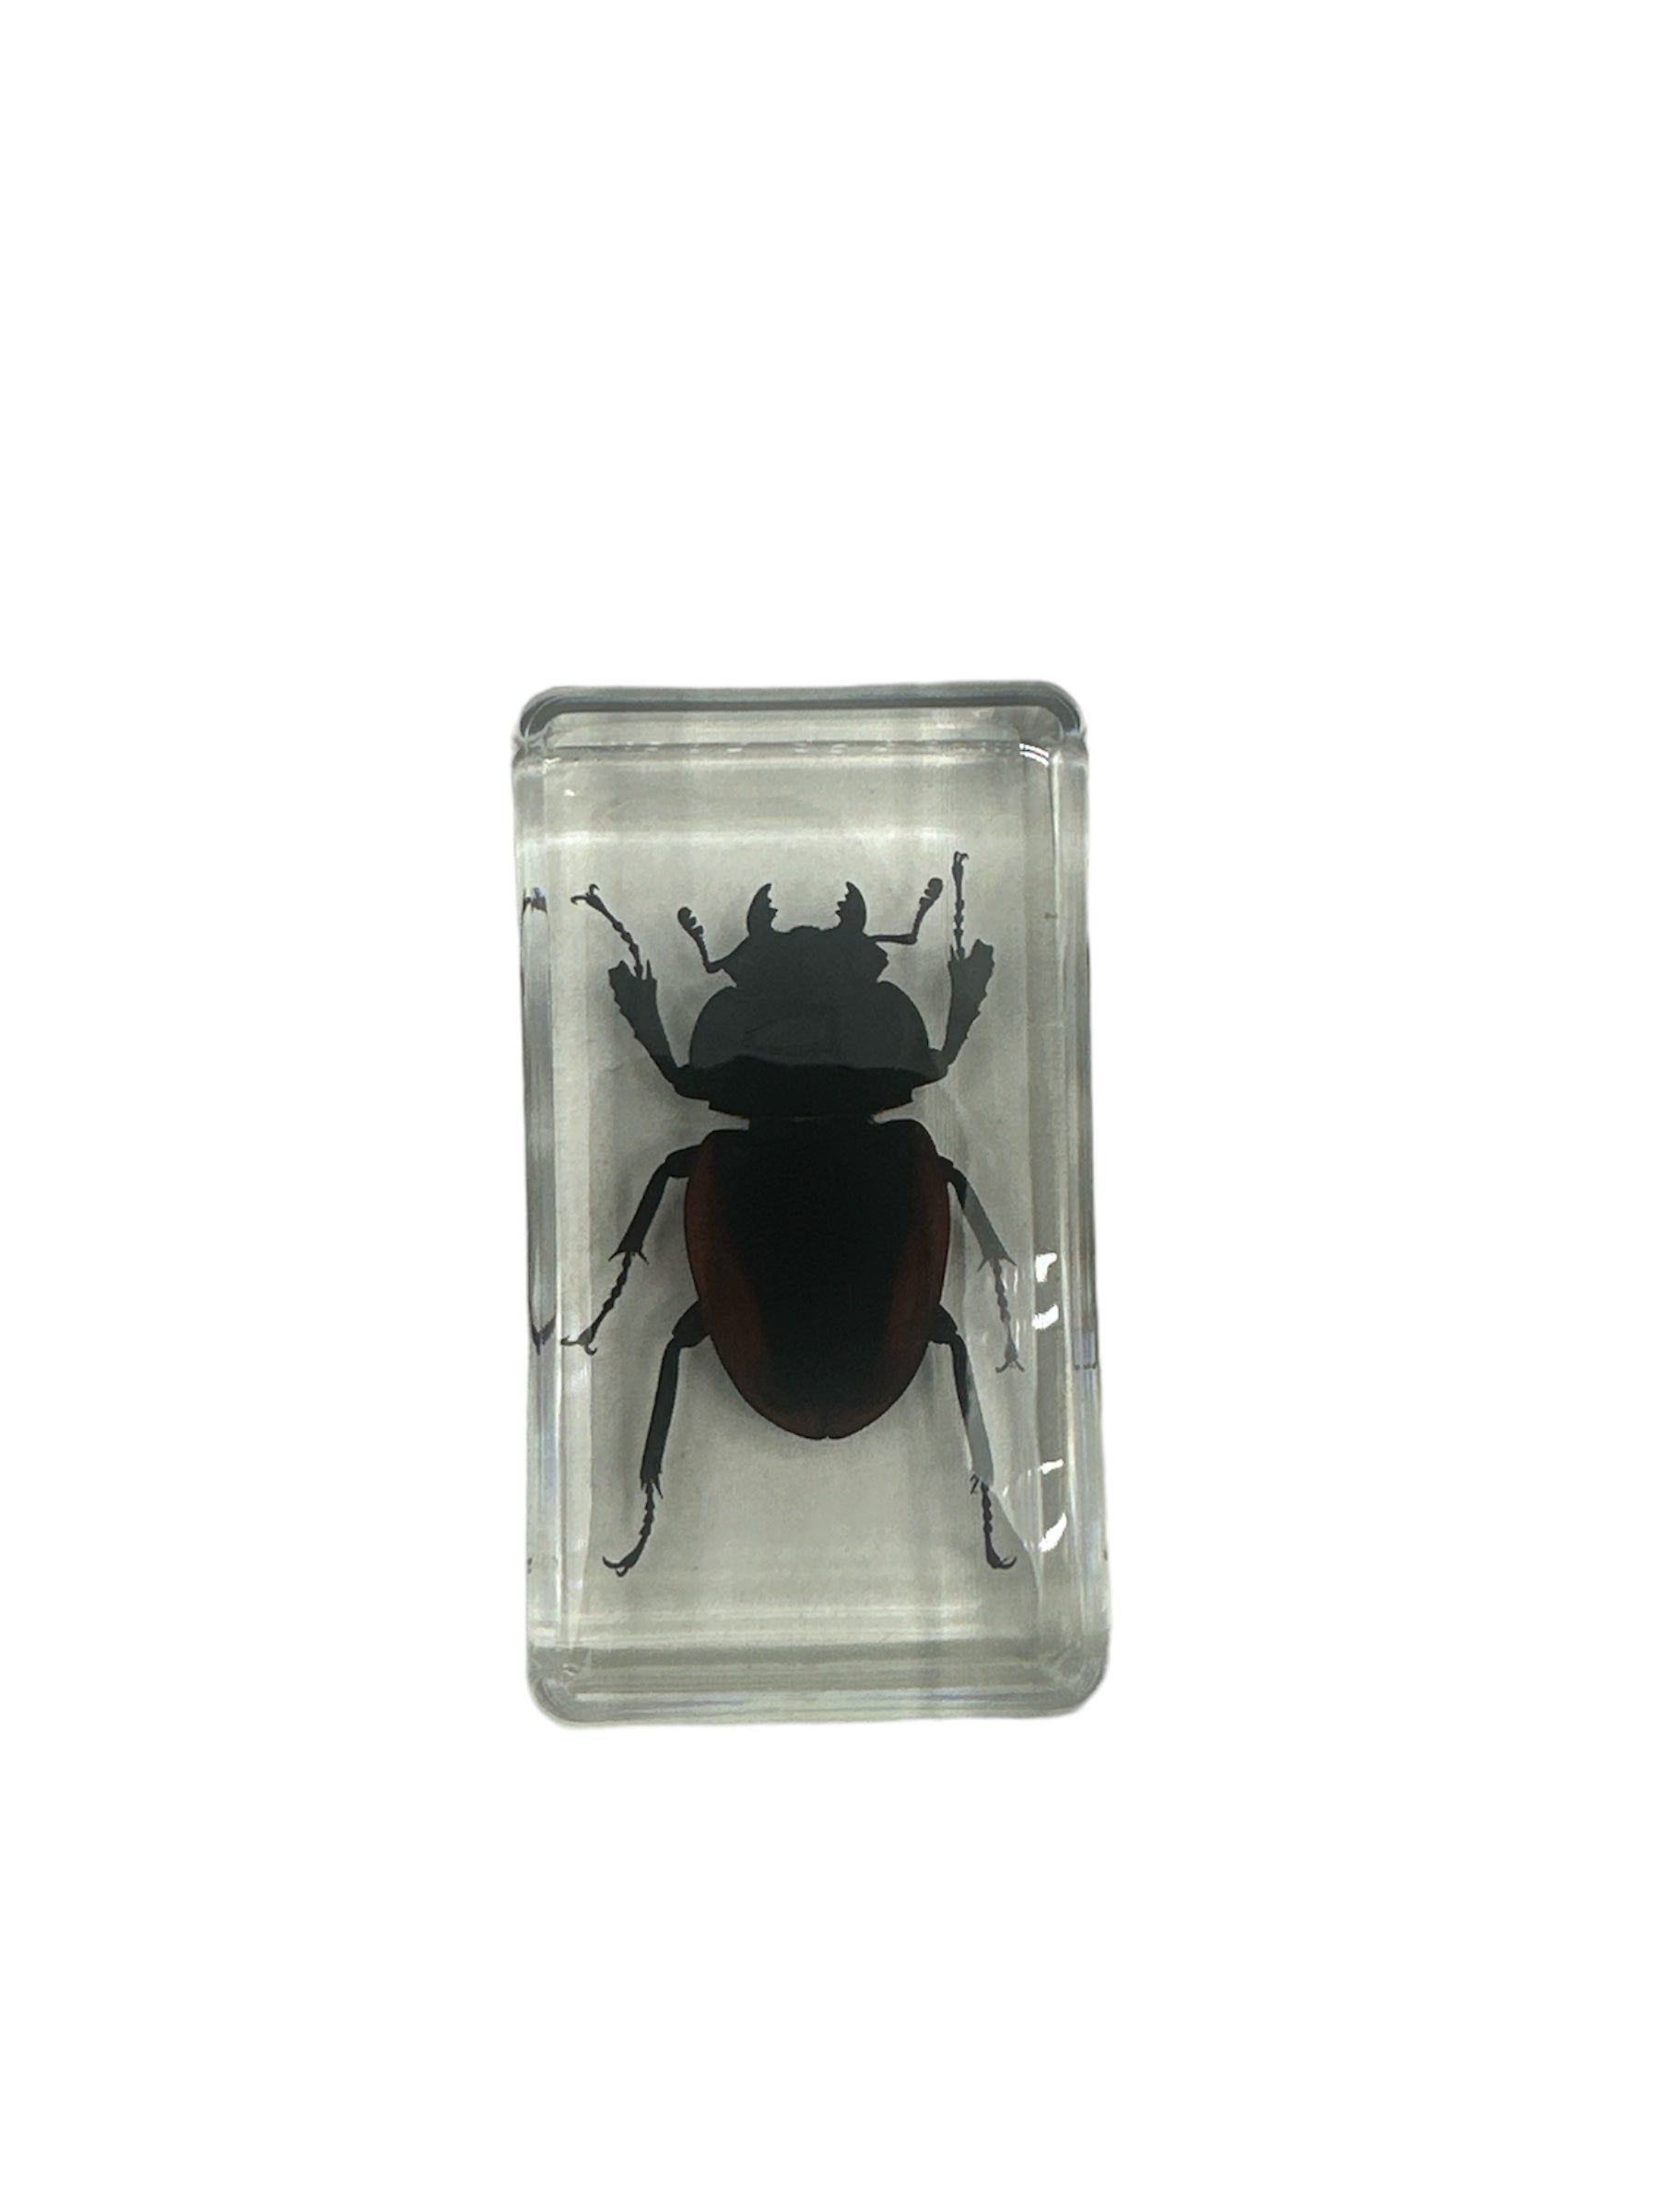 Golden Stag Beetle - Specimen In Resin